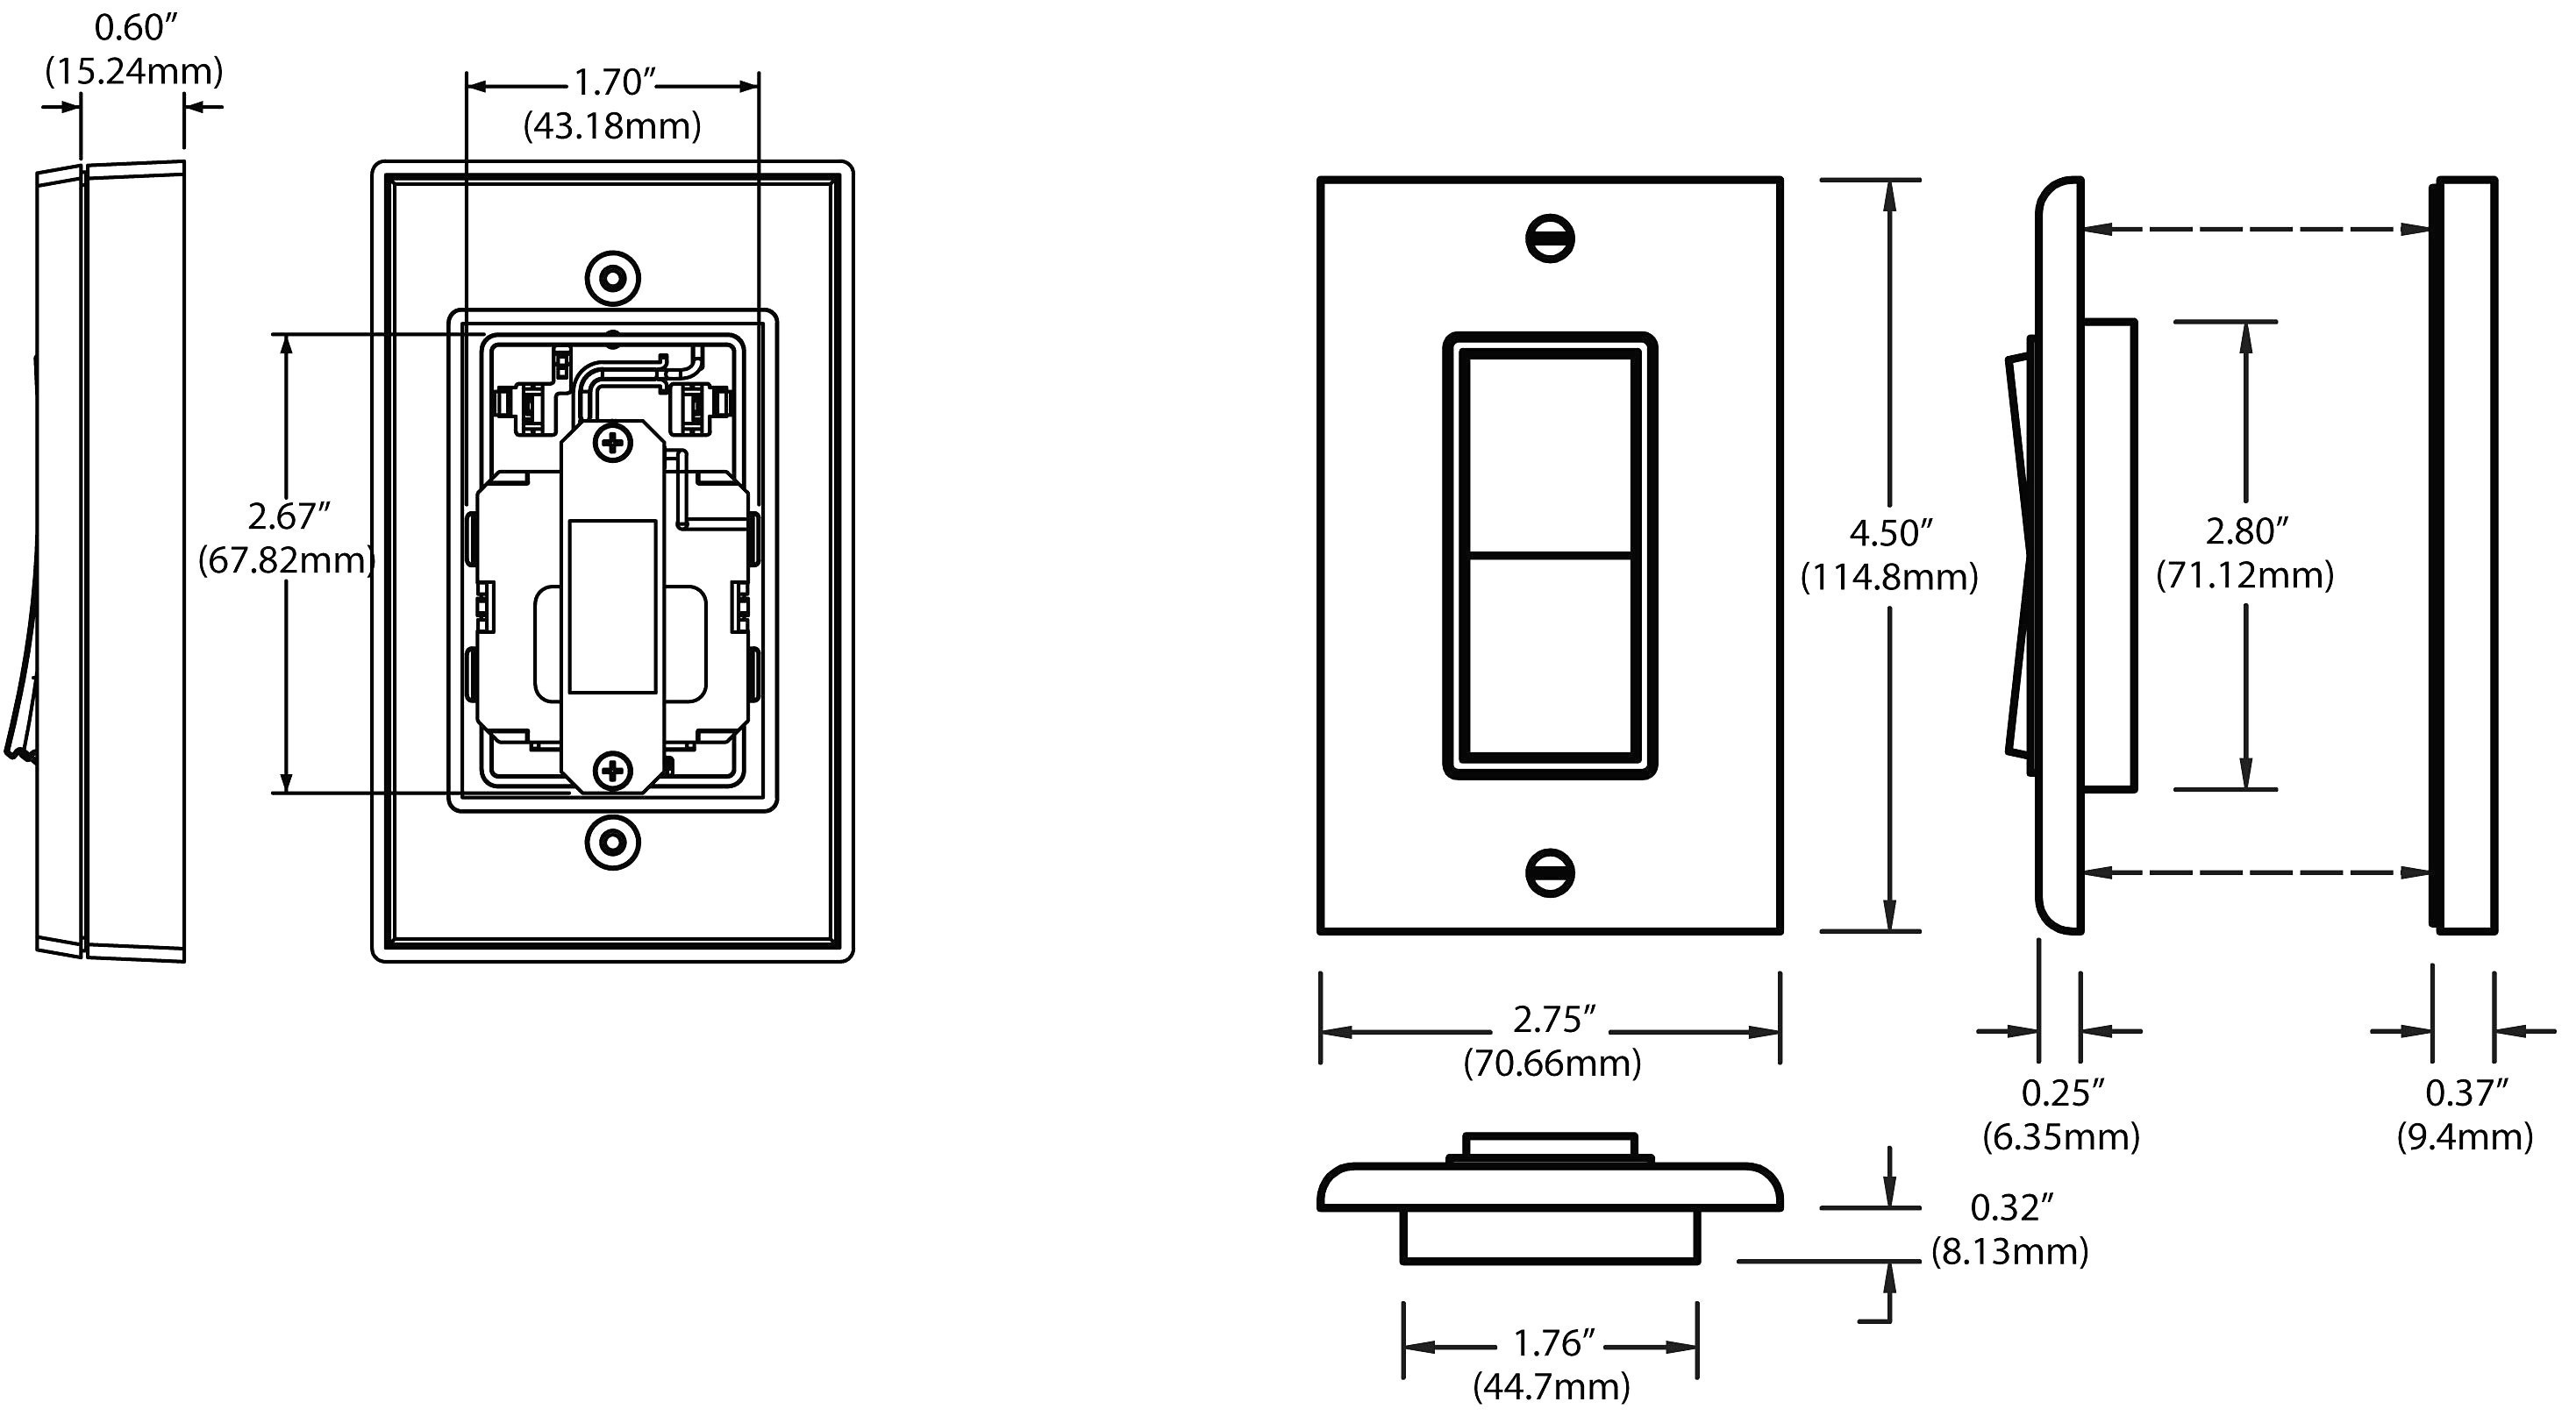 Double Decora Light Switch Wiring Diagram - Wiring Diagram Description - Leviton Double Pole Switch Wiring Diagram